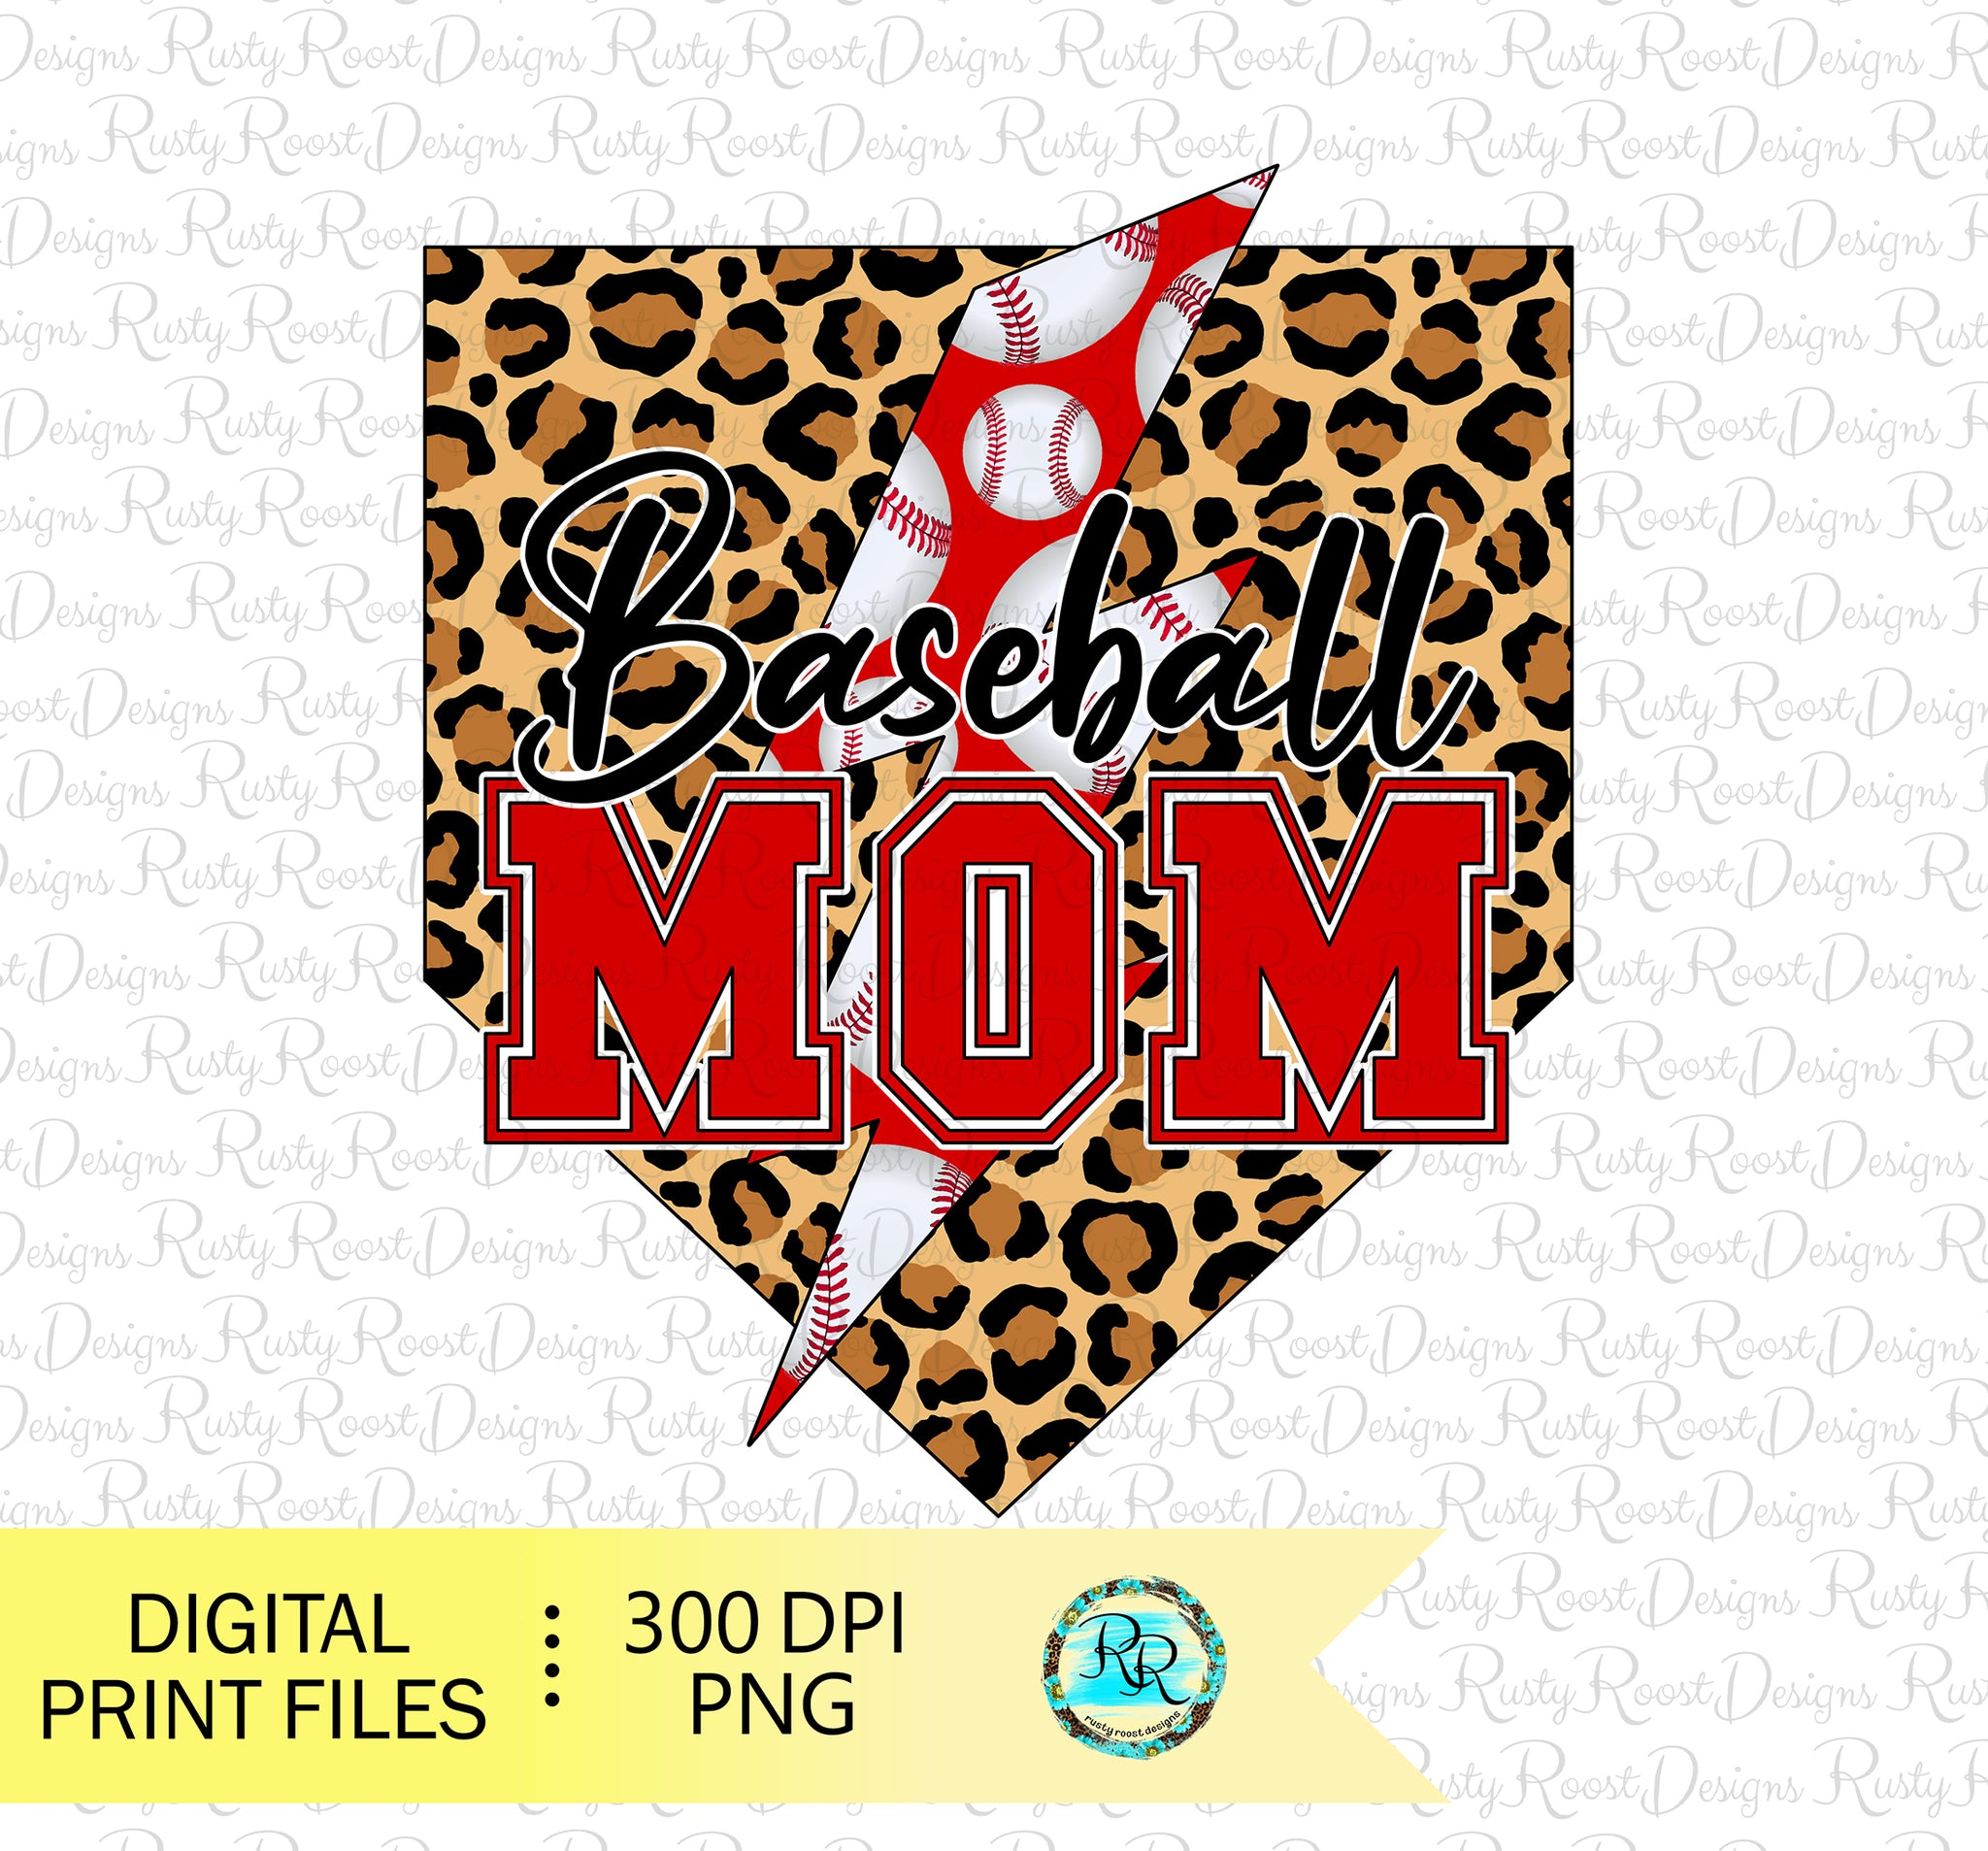 Baseball MOM sublimation Print